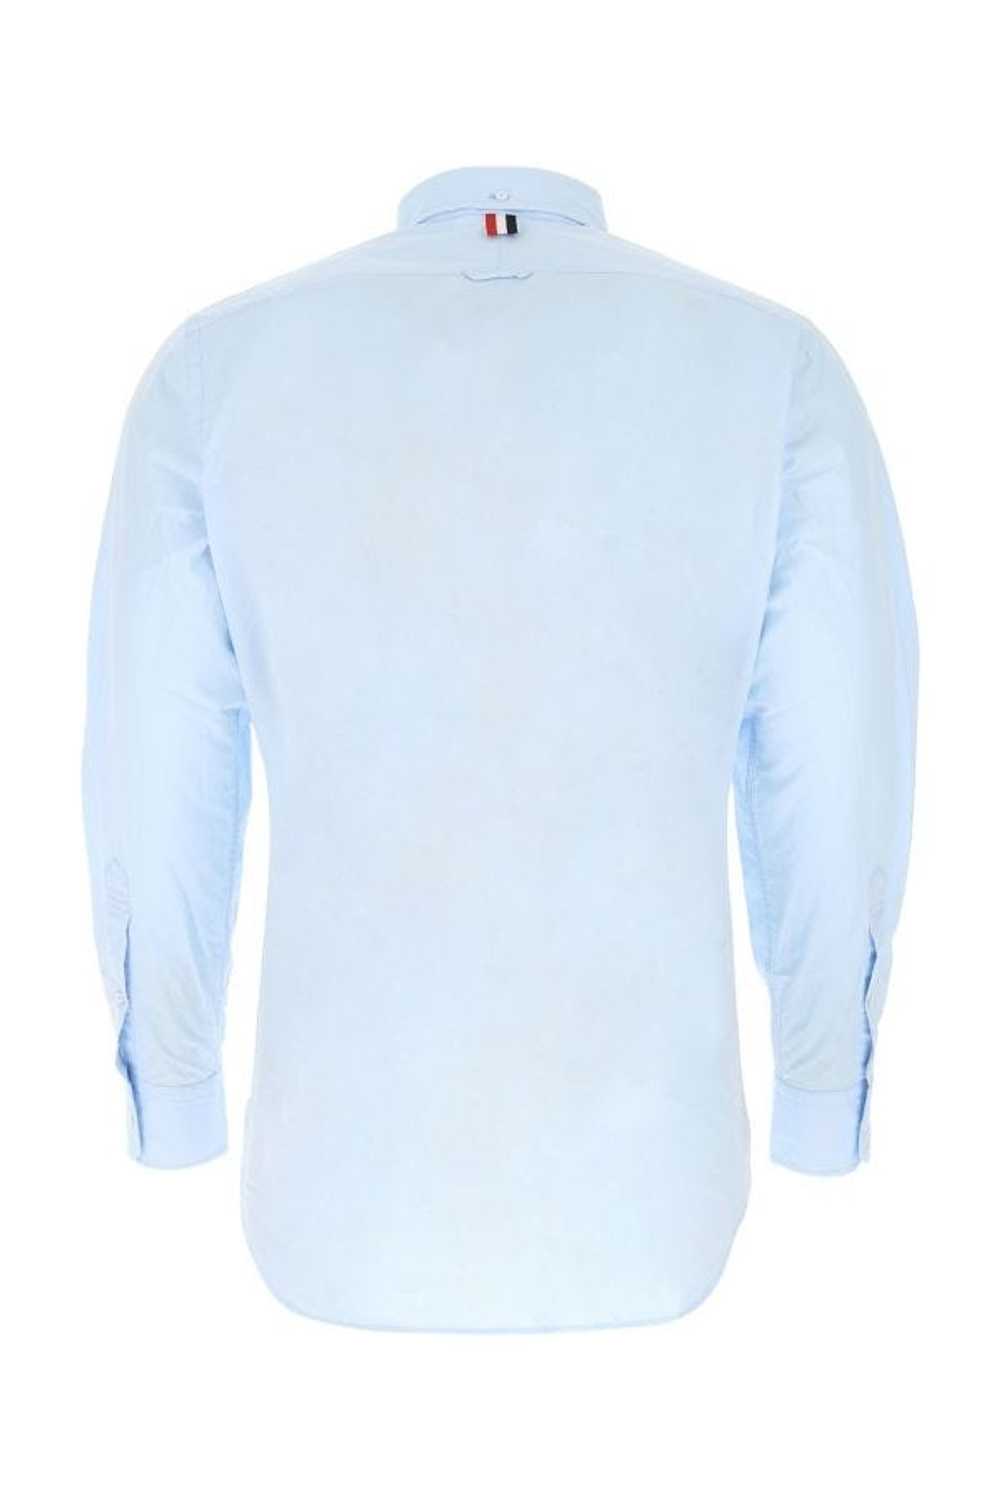 THOM BROWNE Light Blue Popeline Shirt - image 2